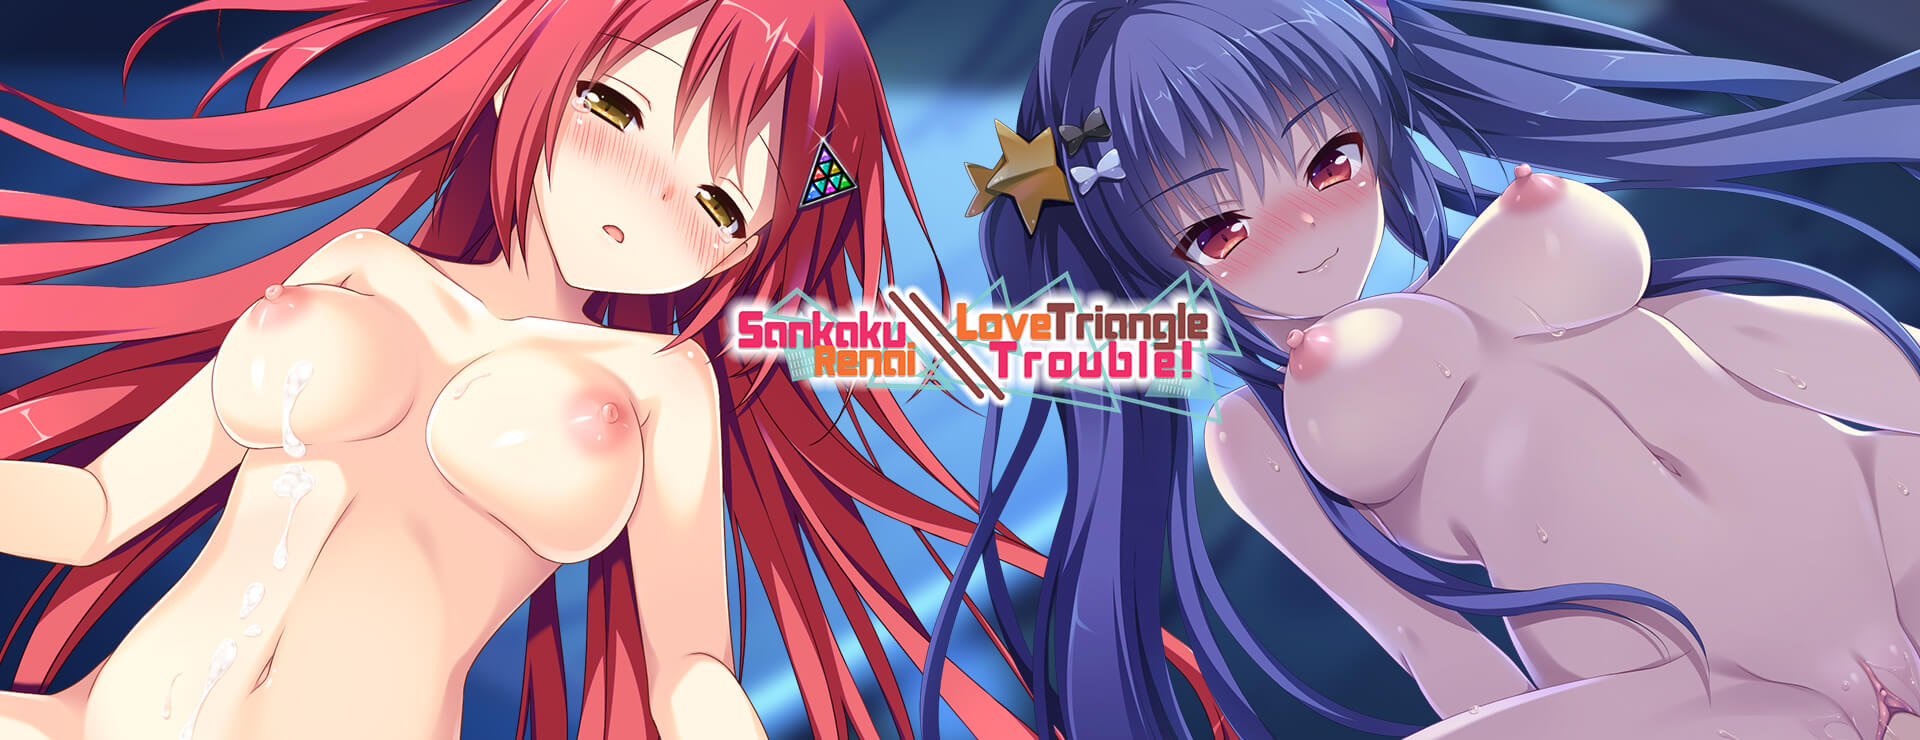 Sankaku Renai - Love Triangle Troubles - ビジュアルノベル ゲーム